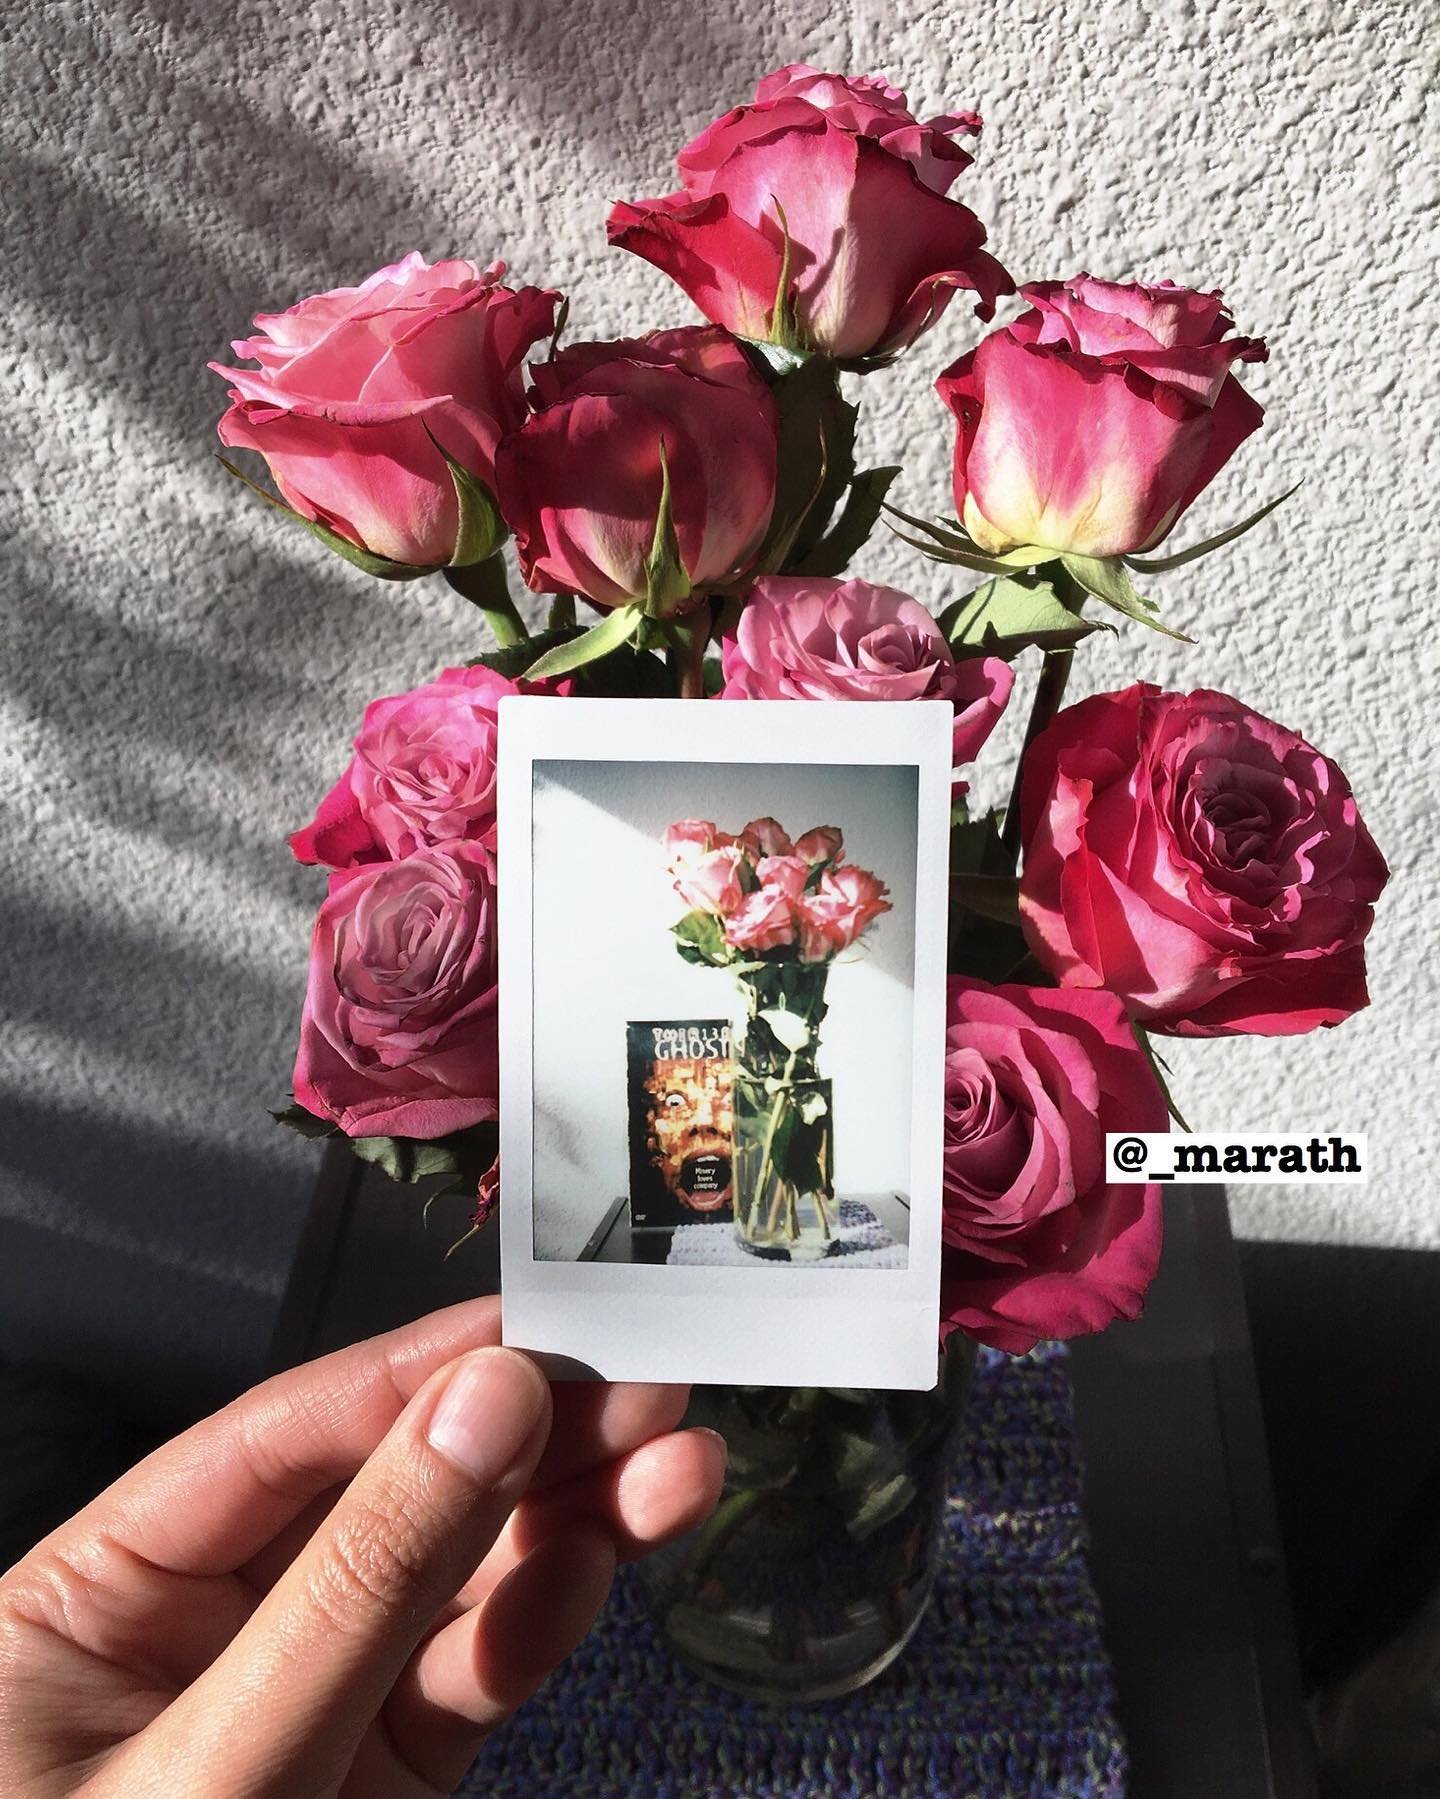 24 marathmarath flores.jpg